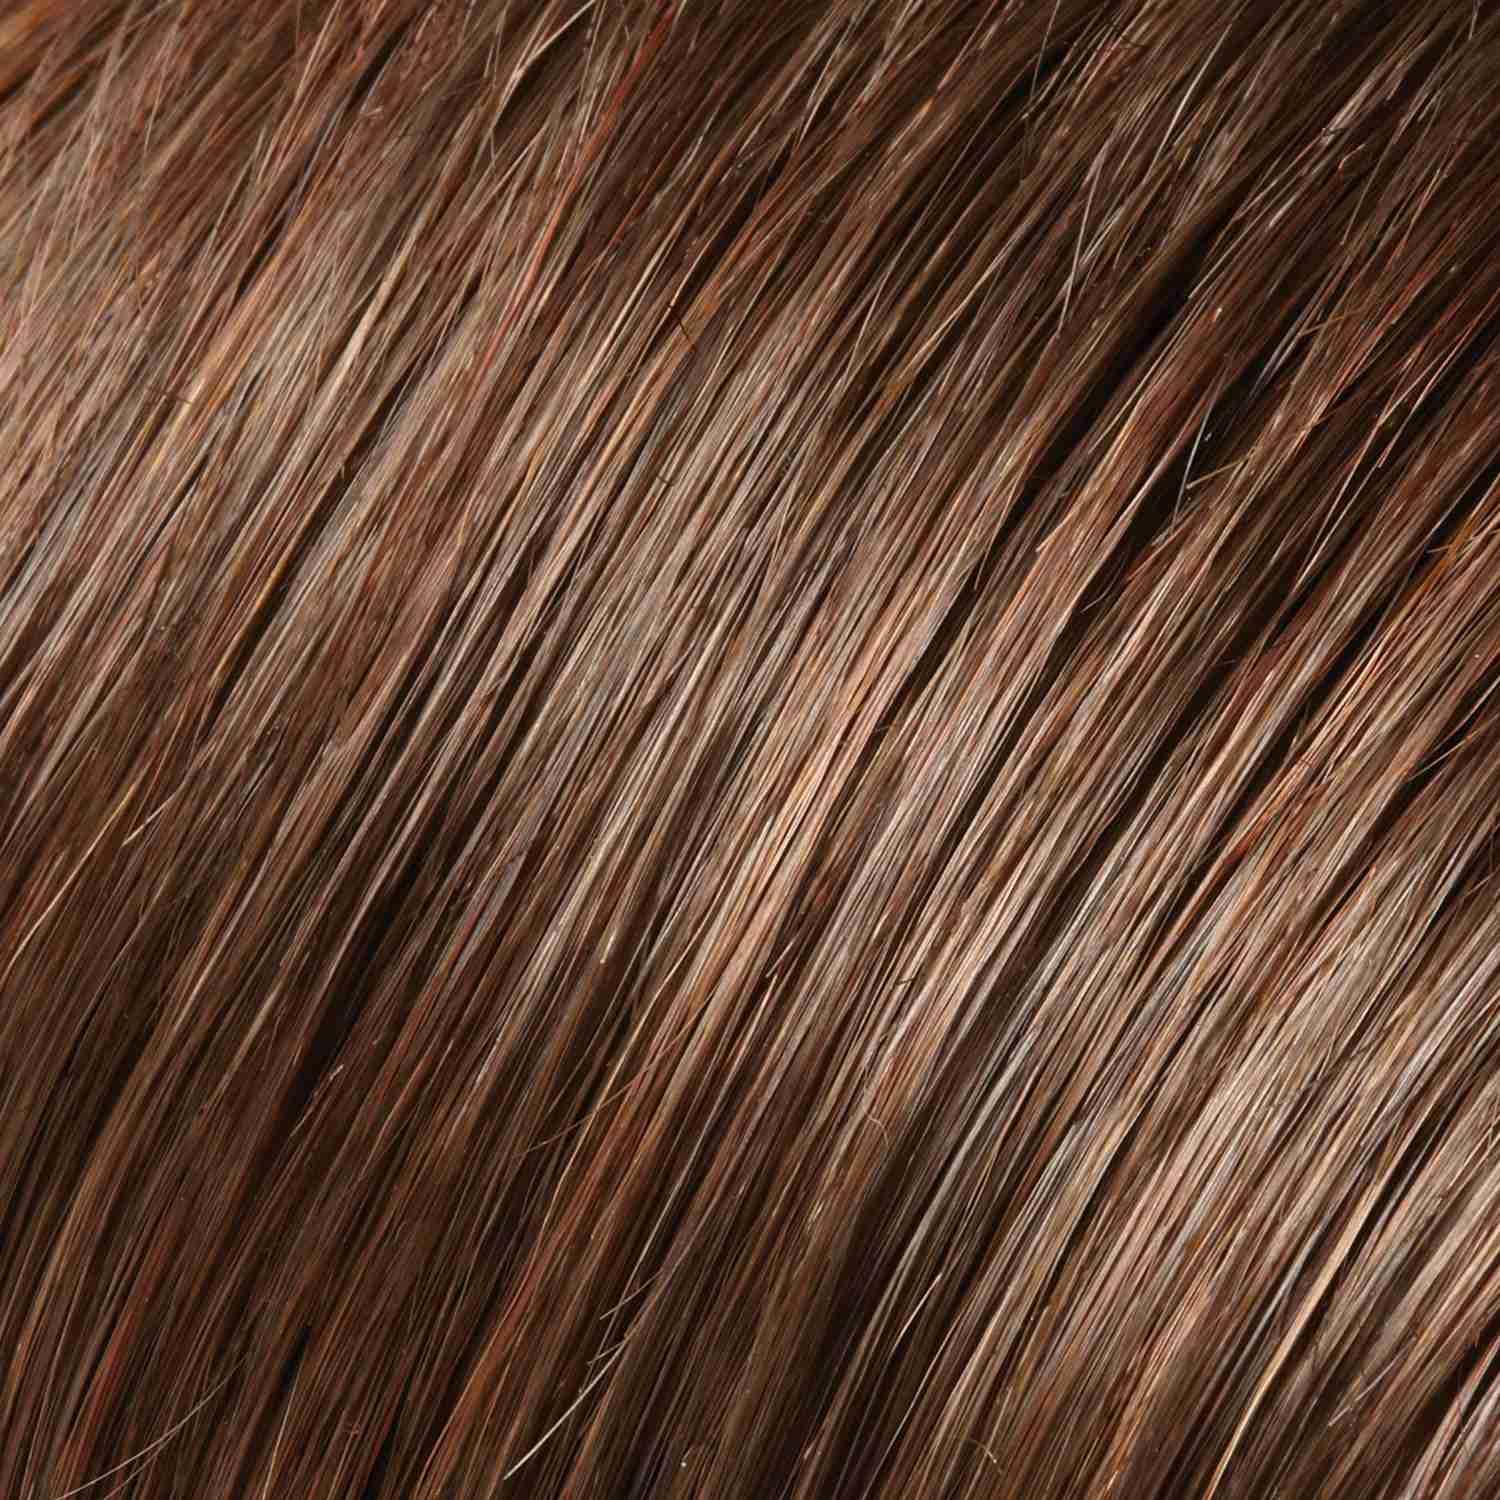 easiVolume 10" by Jon Renau | 100% Human Hair Extension (Clip In)